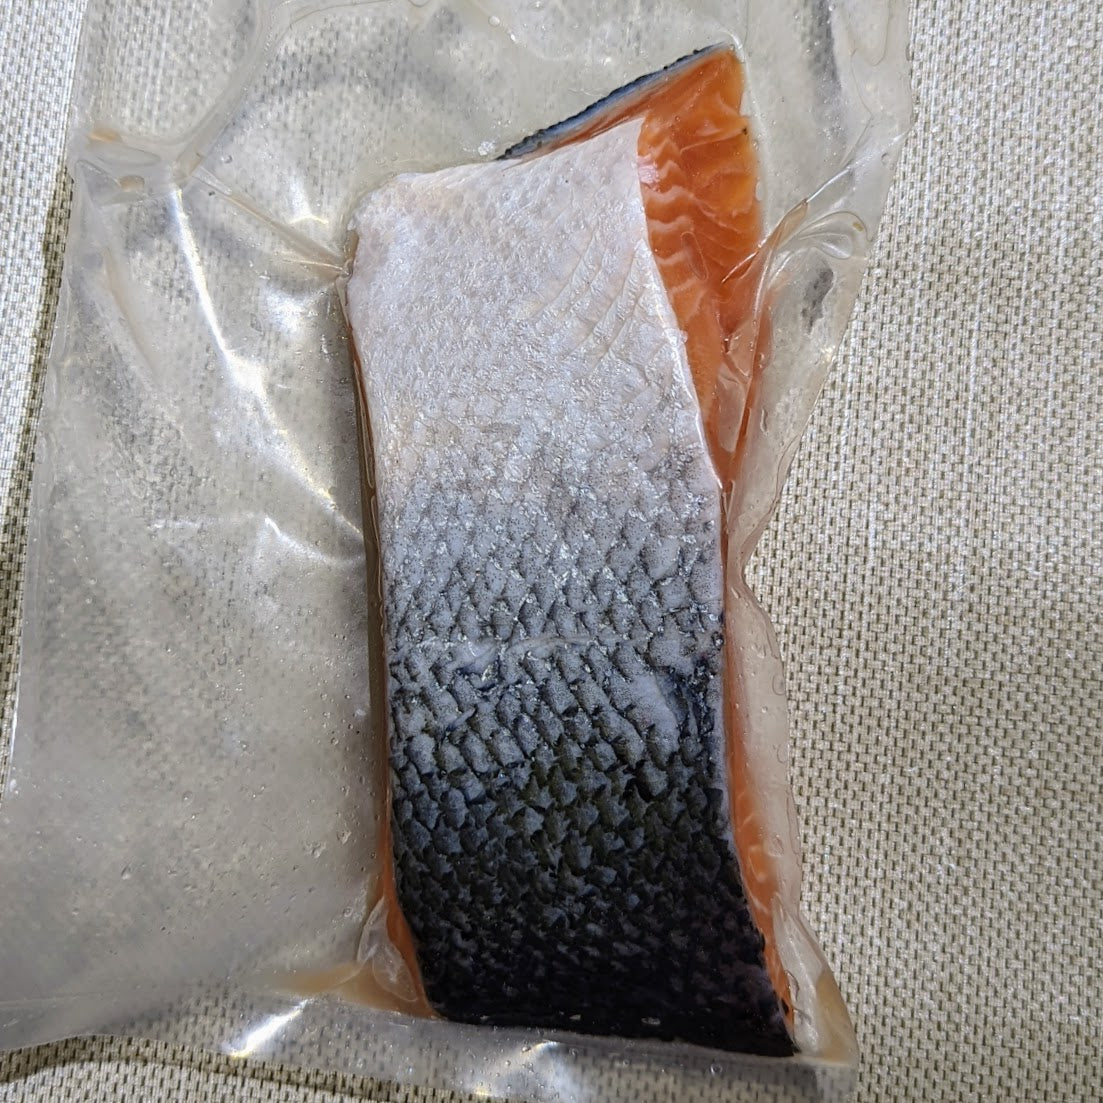 [Fresh] Arctic Salmon fillet (250g - 300g)